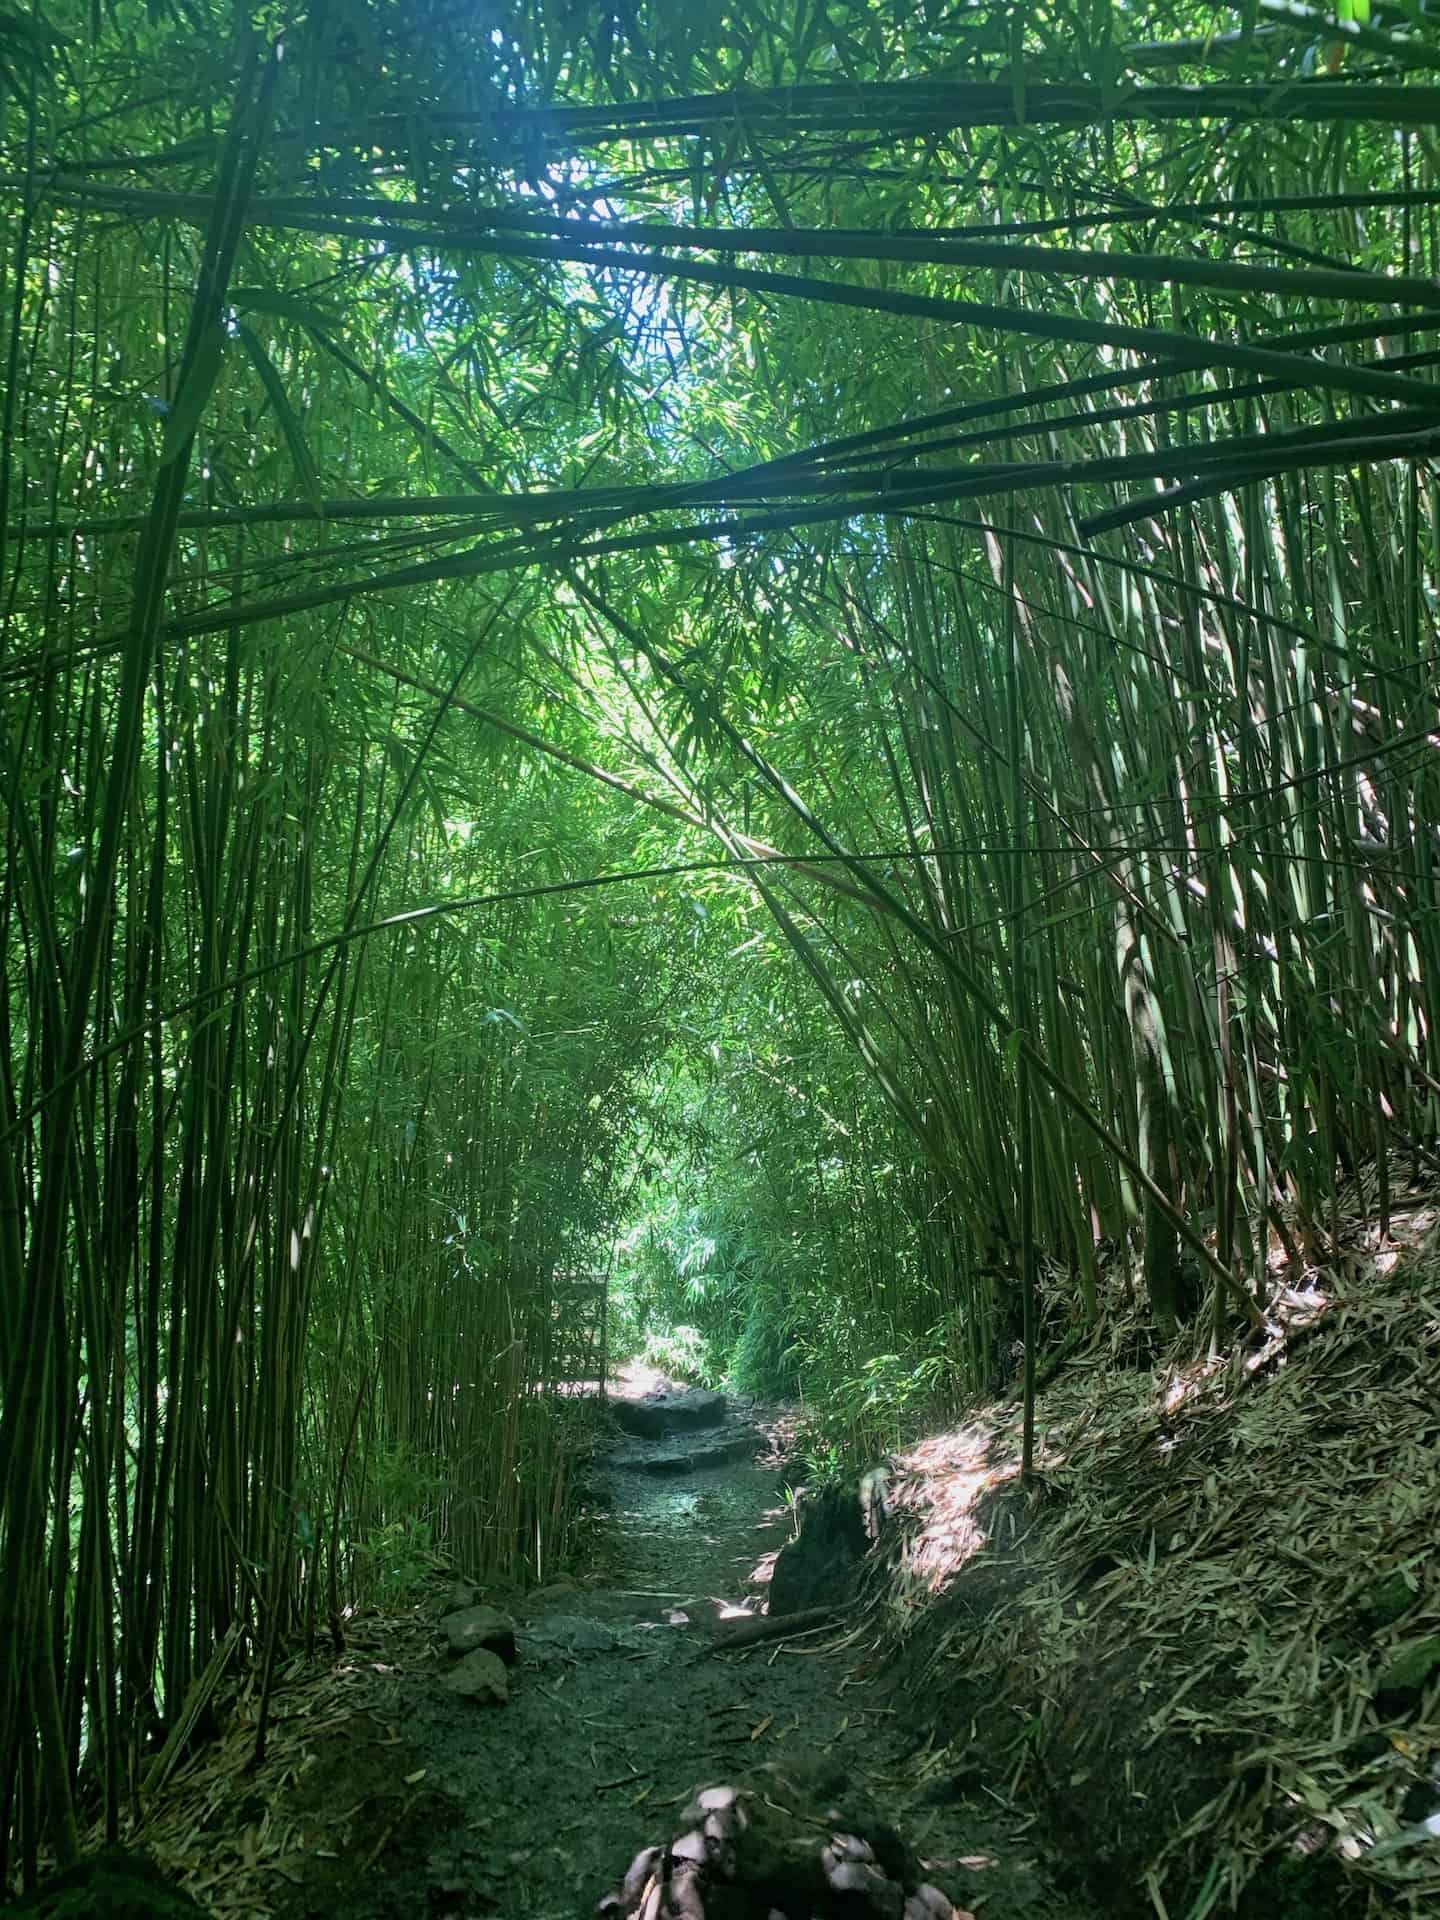 THE PIPIWAI TRAIL – MAUI’S BAMBOO FOREST